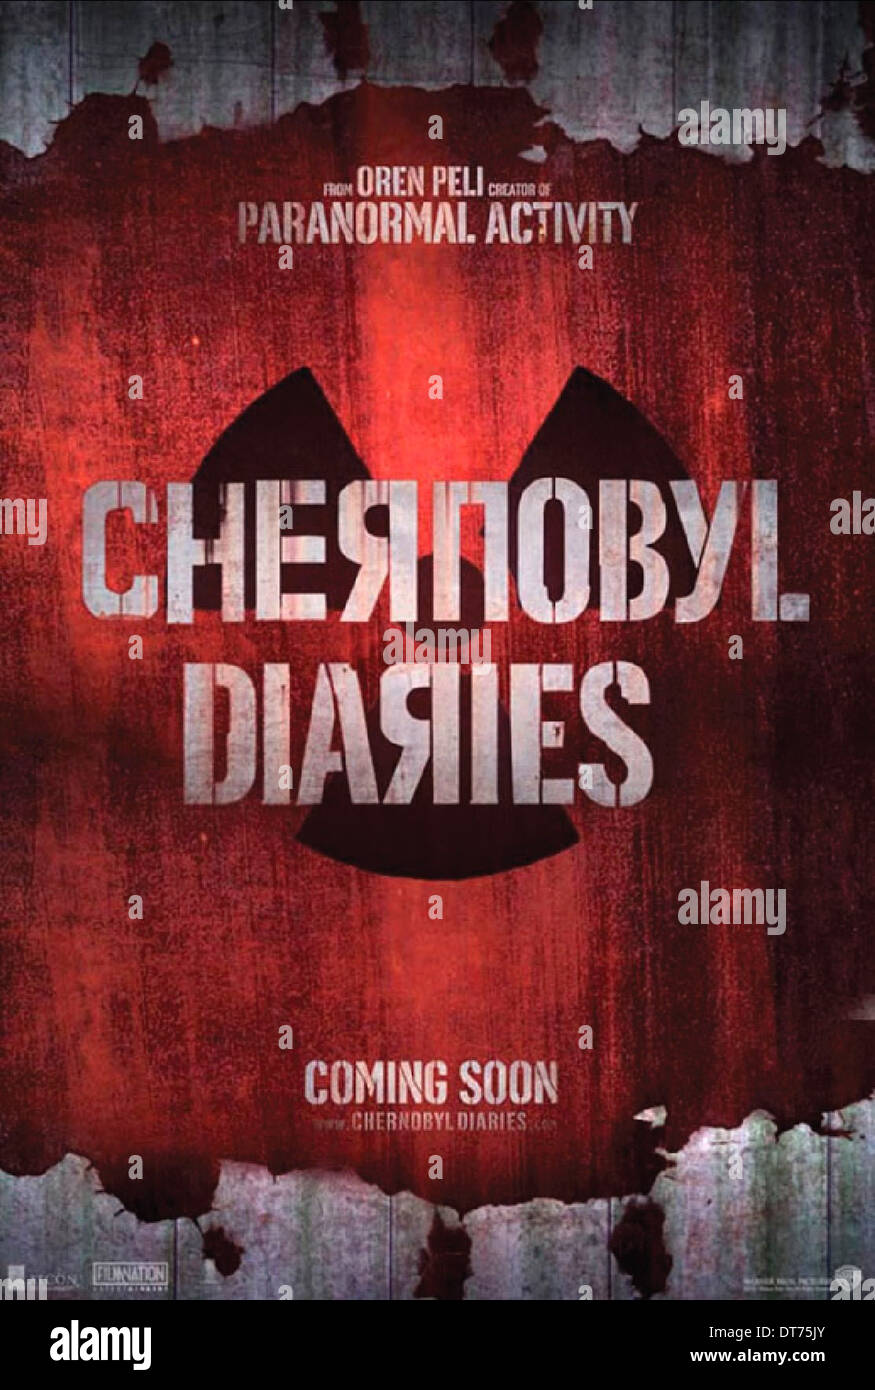 Film Poster Chernobyl Diaries 2012 Stockfotografie Alamy